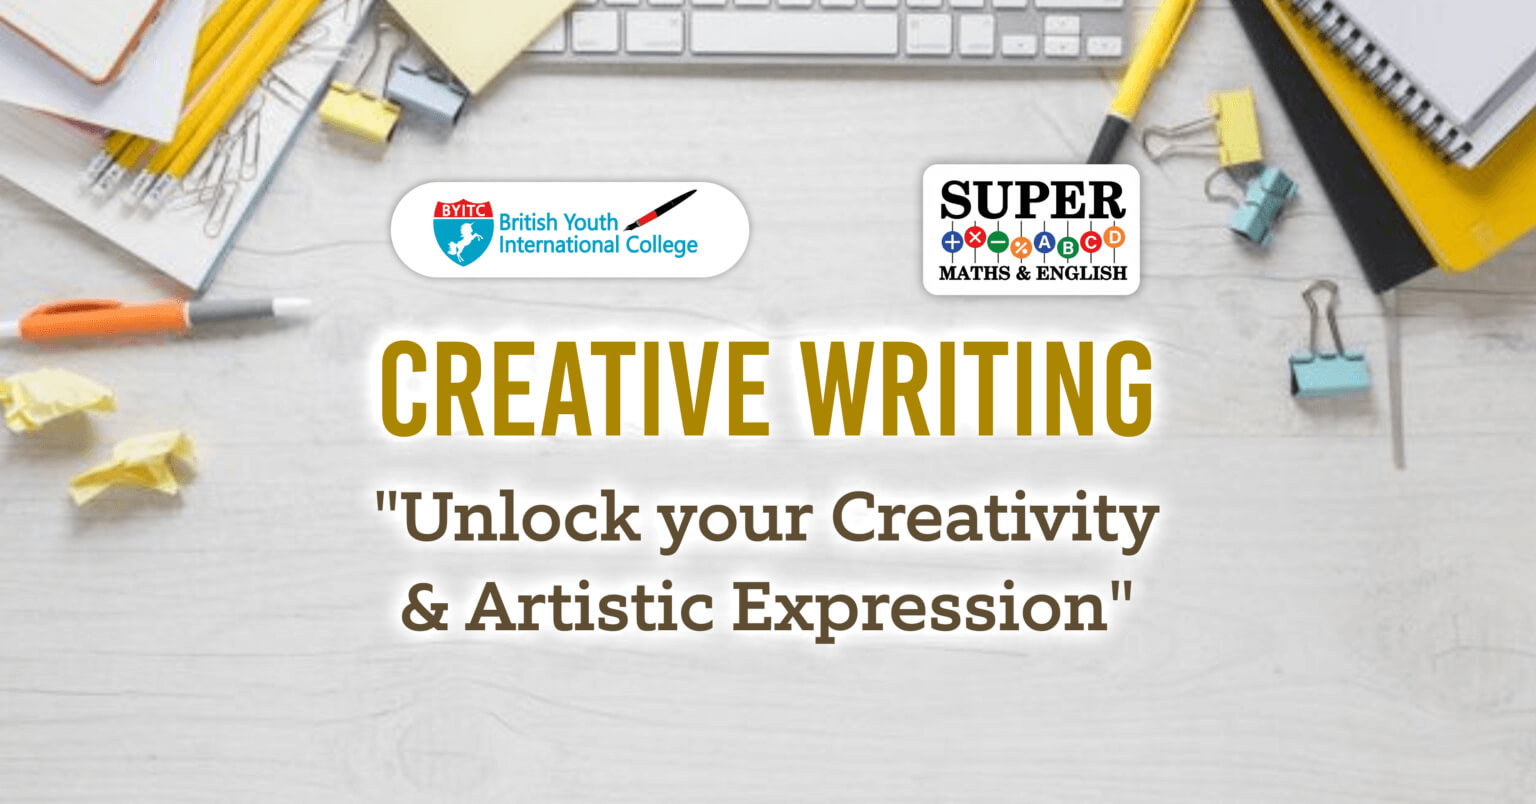 Creative Writing -“Unlock your Creativity & Artistic Expression”